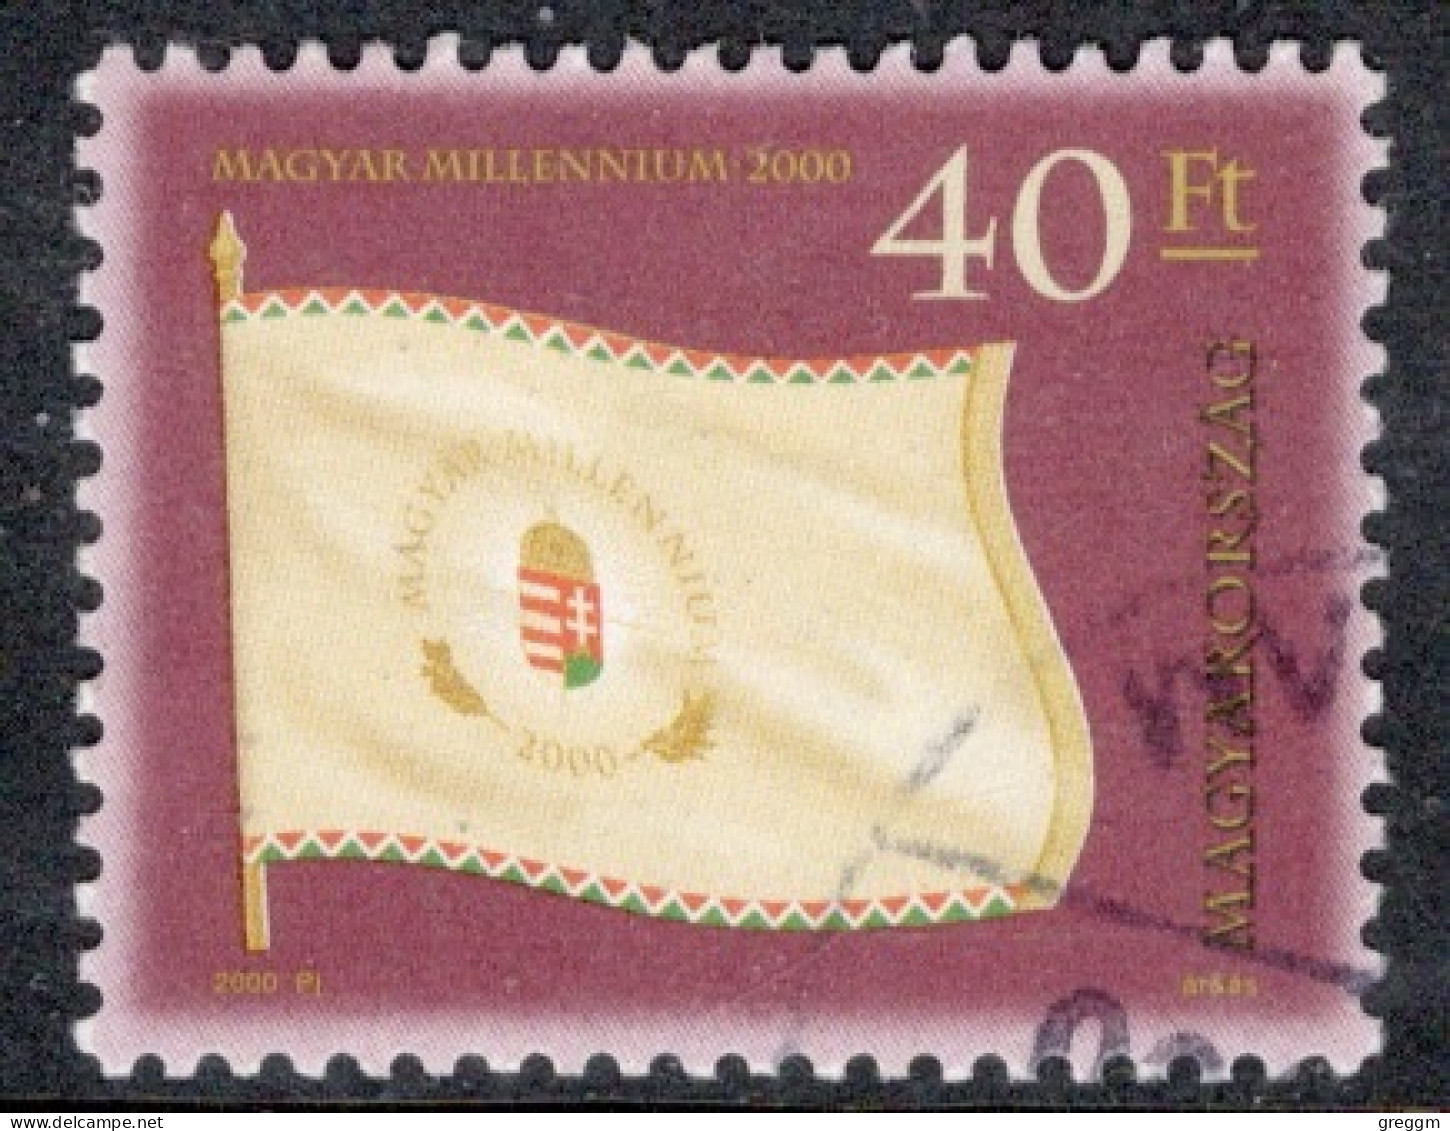 Hungary 2000  Single Stamp Celebrating Millennium In Fine Used - Usado